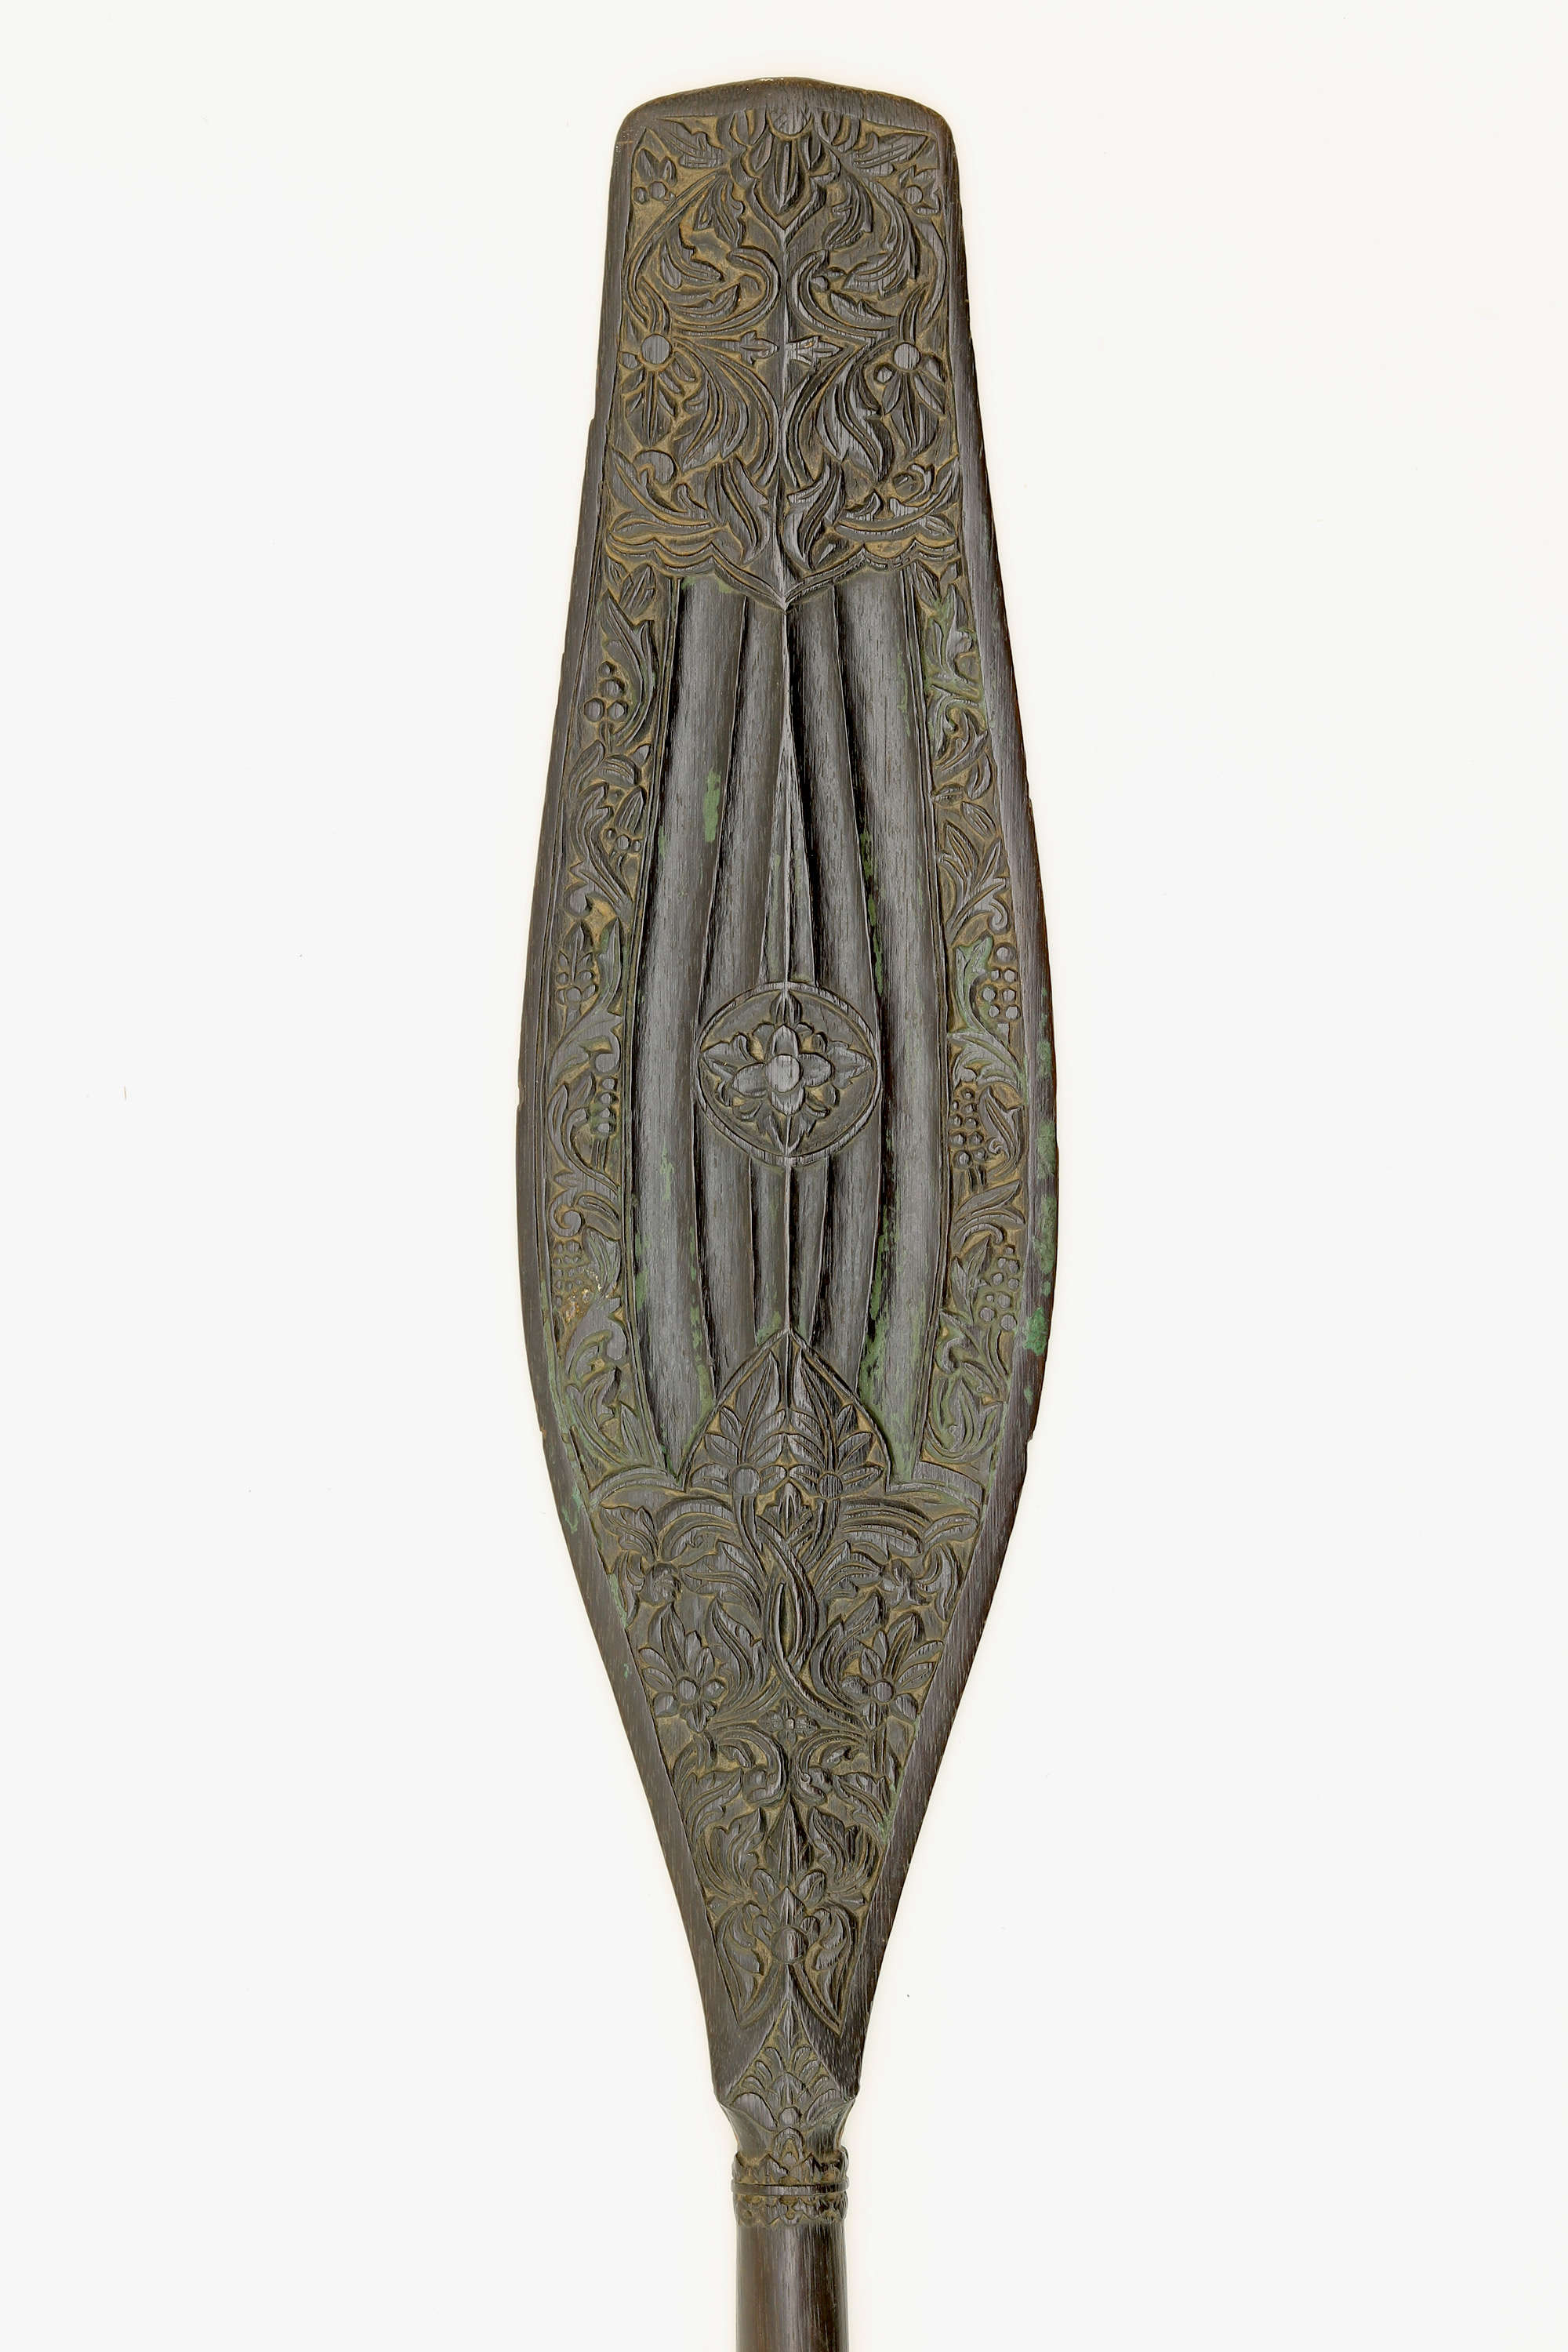 Dayak ceremonial carved paddle